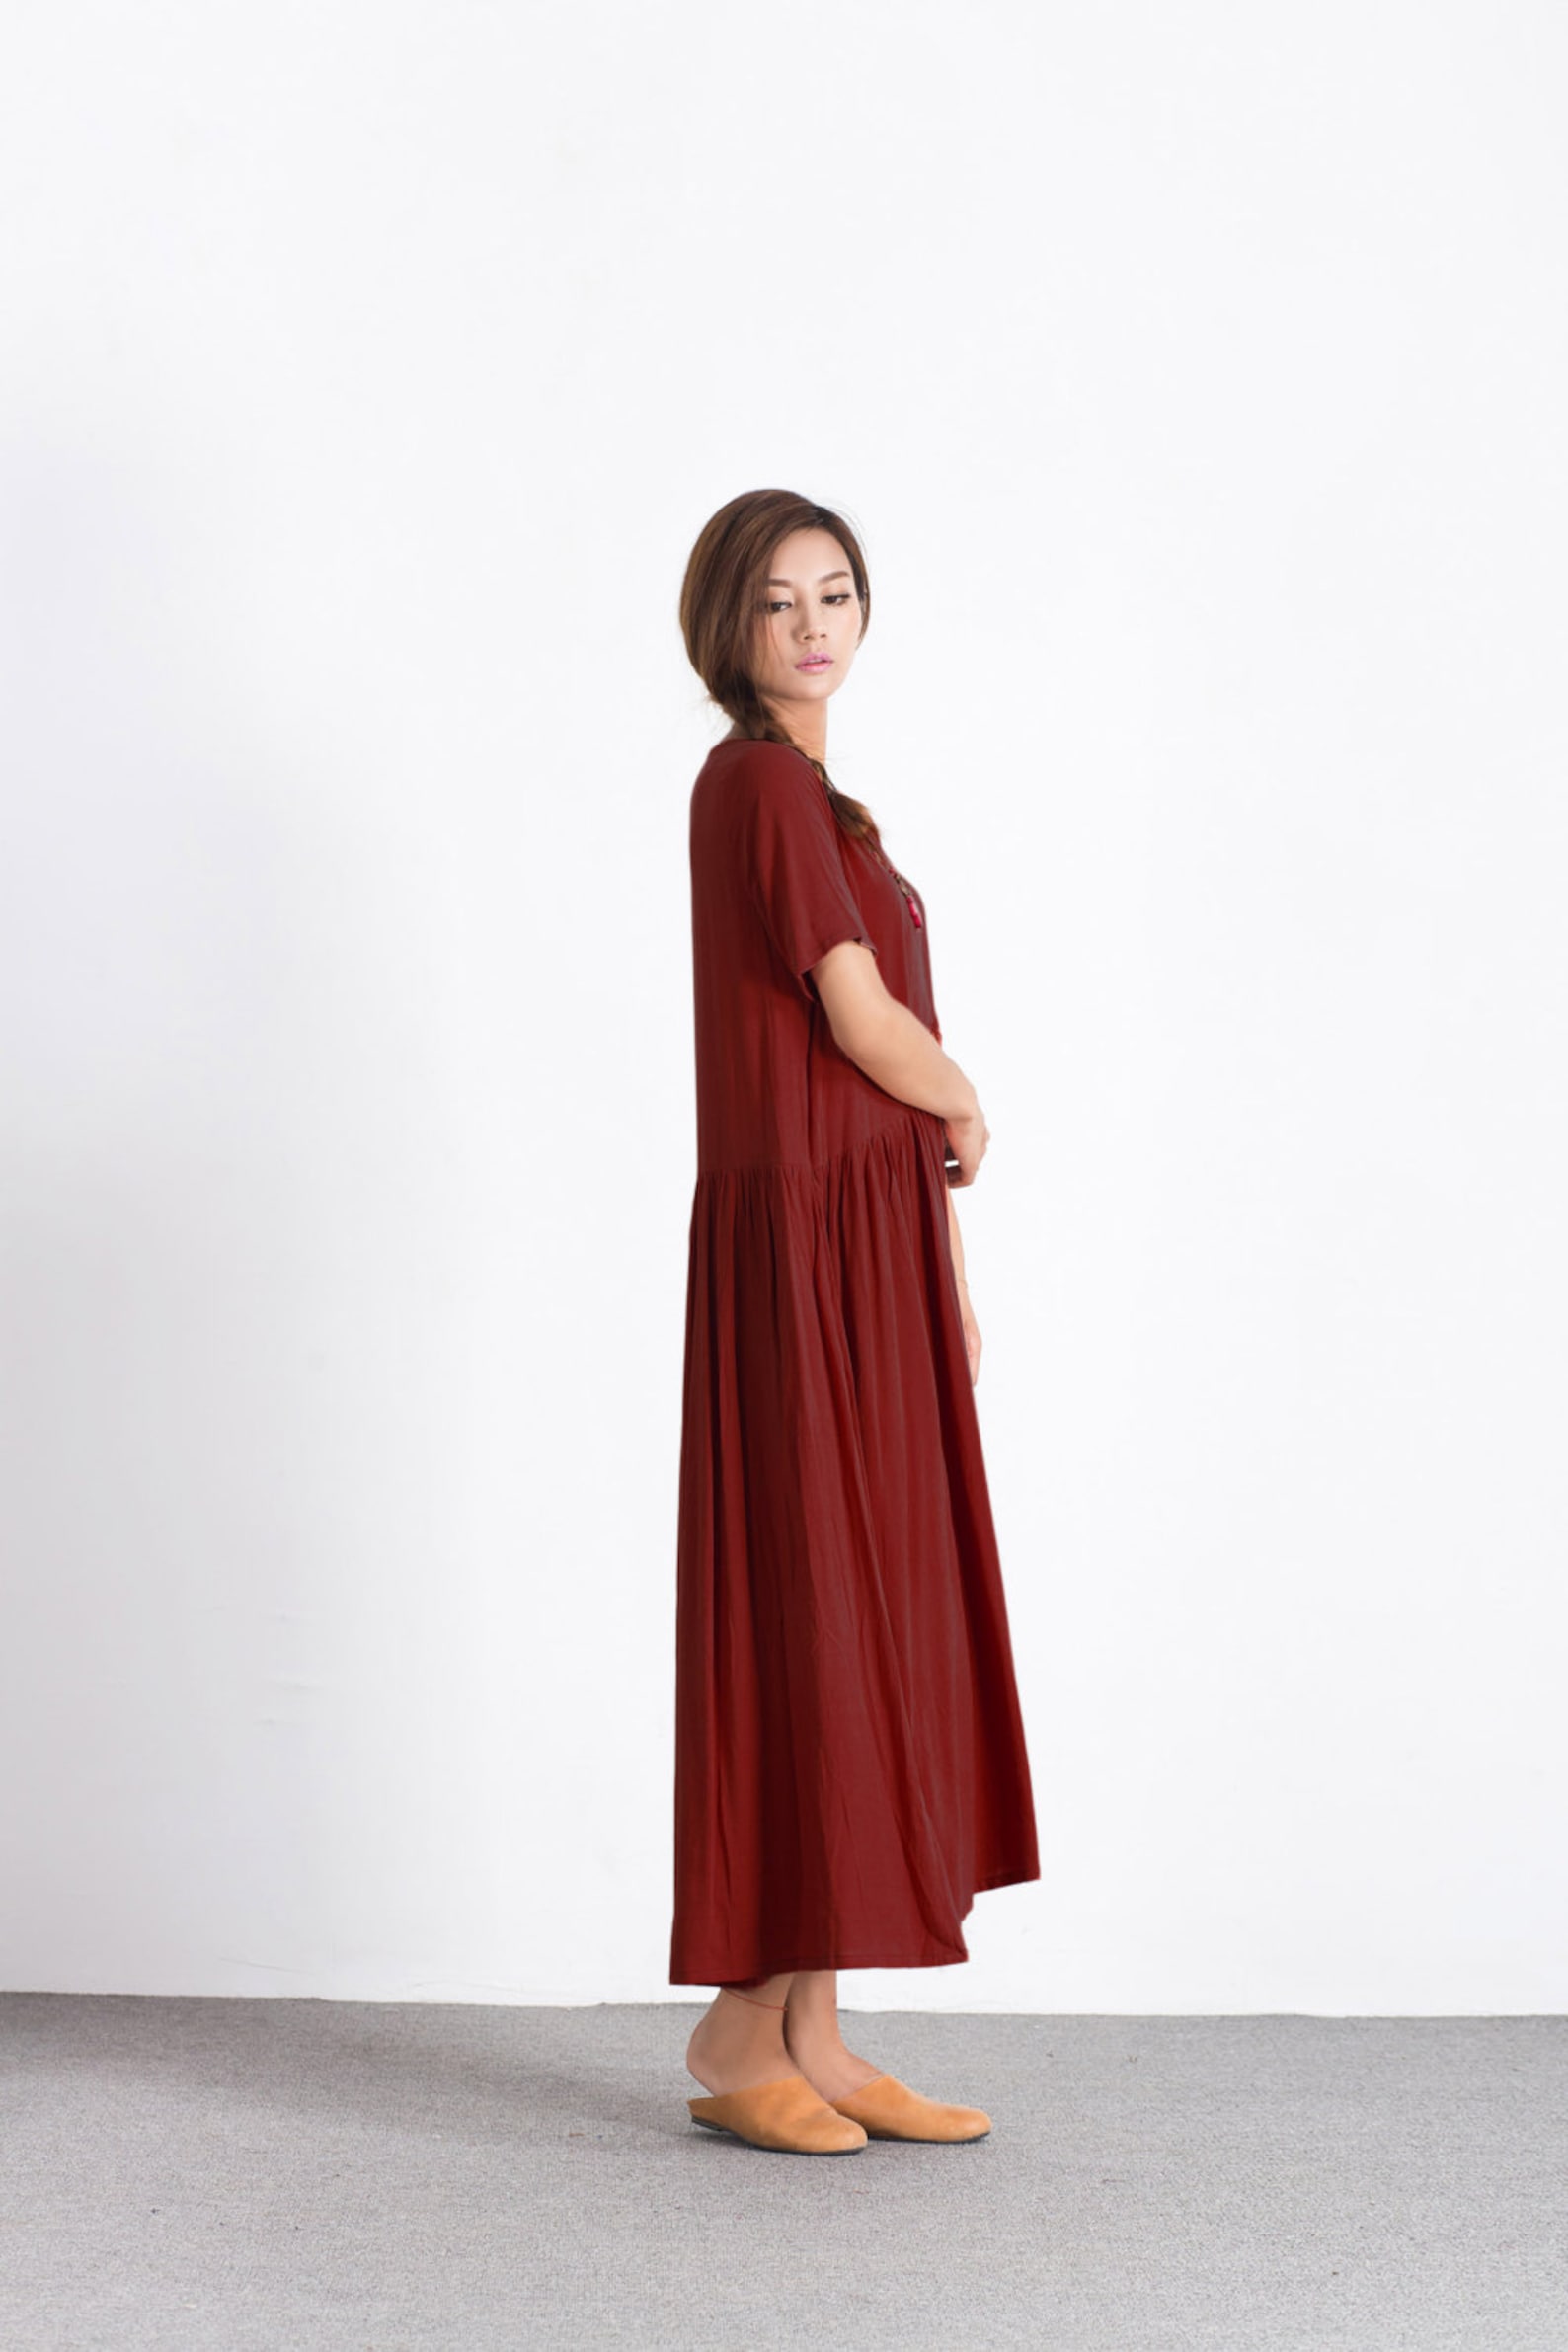 50% SALE Women linen maxi dress Short Sleeves Summer Dresses | Etsy